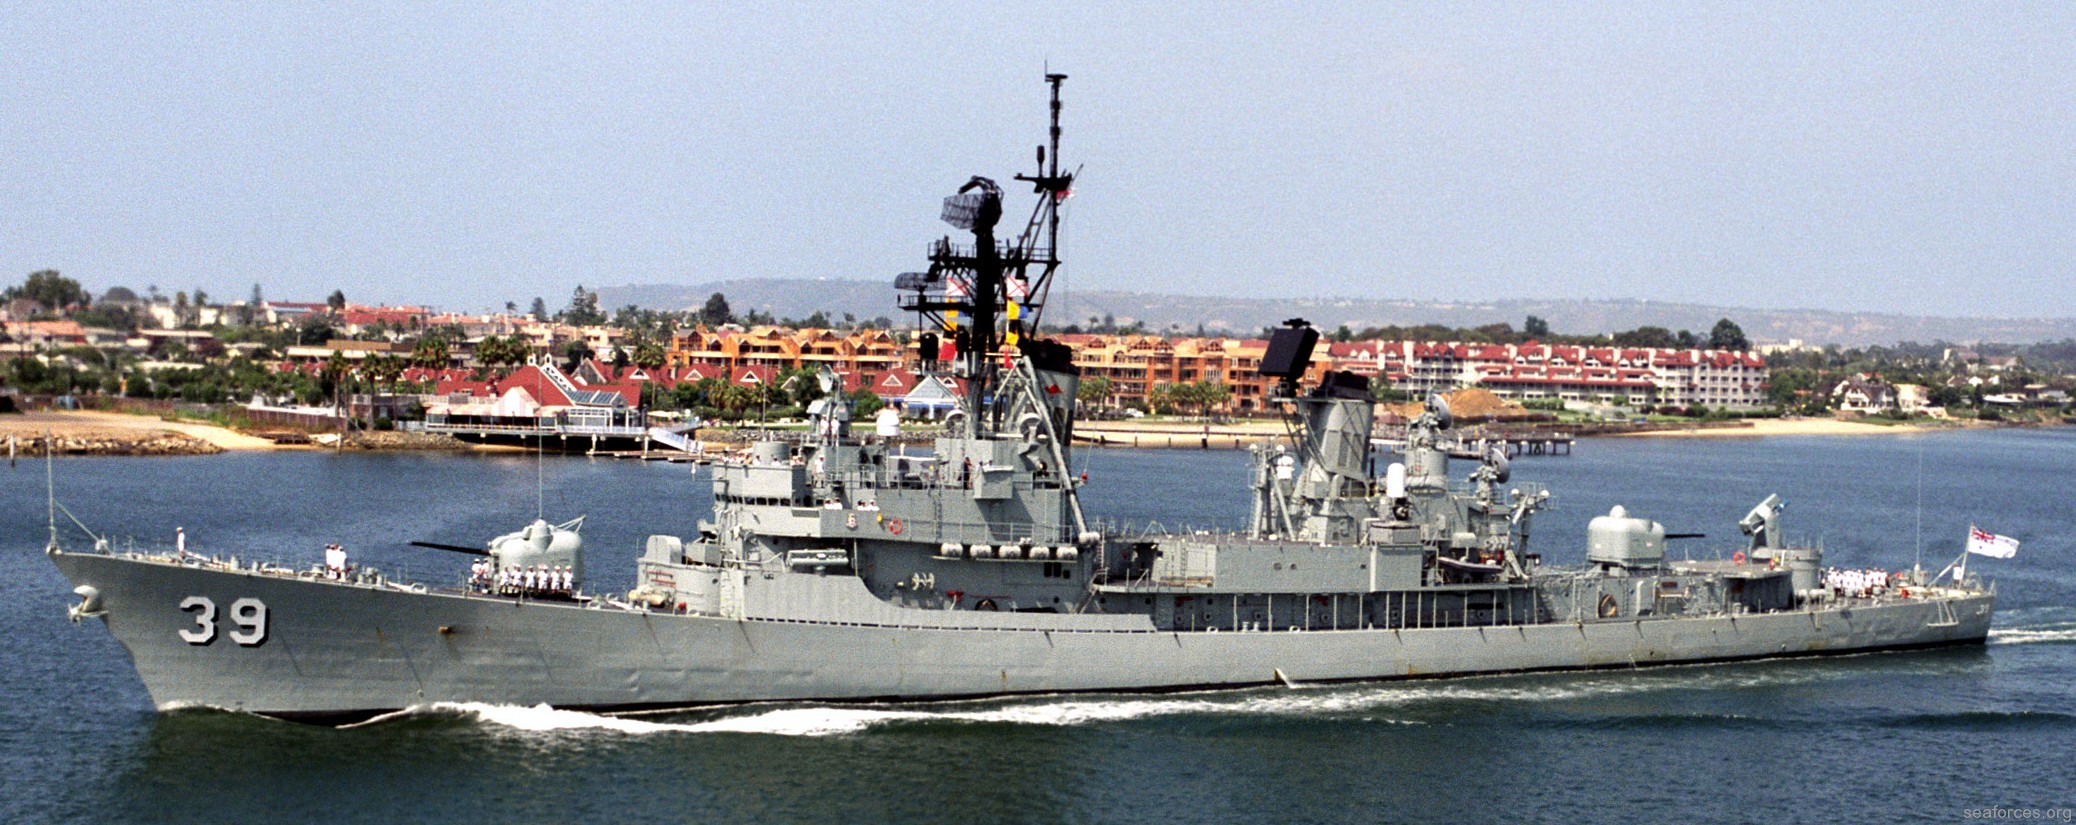 hmas hobart ddg-39 perth class guided missile destroyer royal australian navy 04